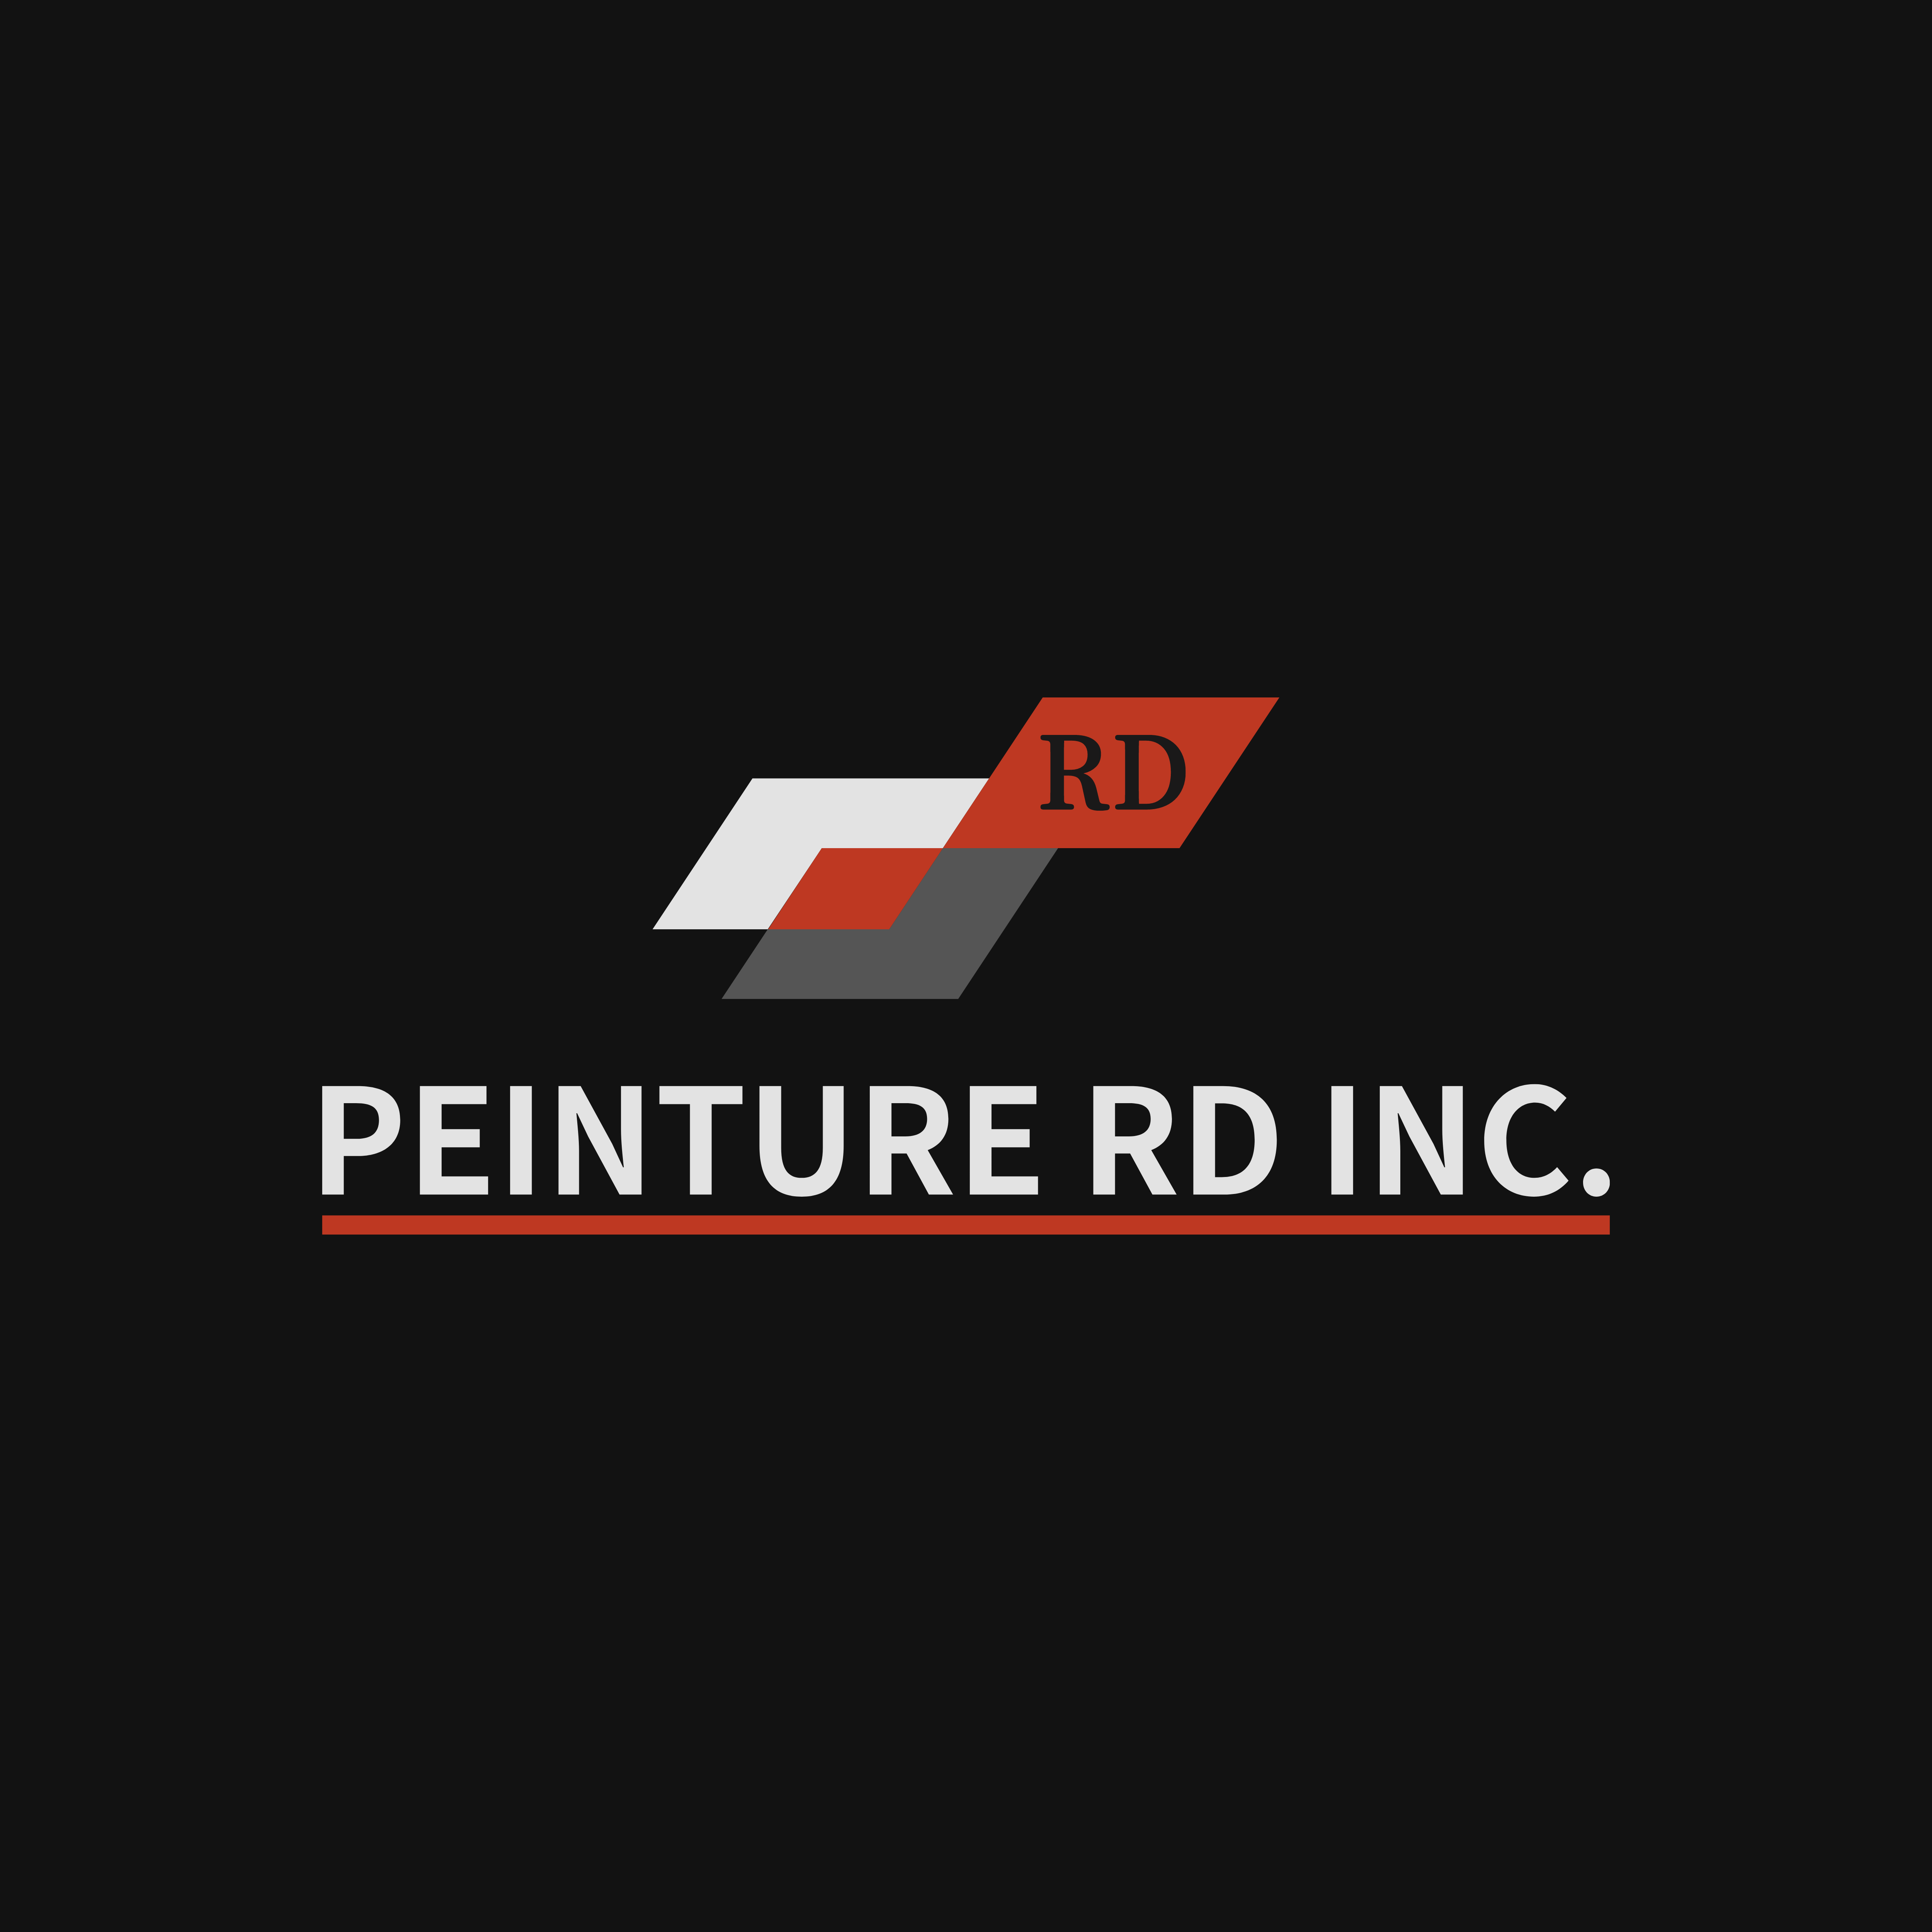 Peinture RD Inc. Logo